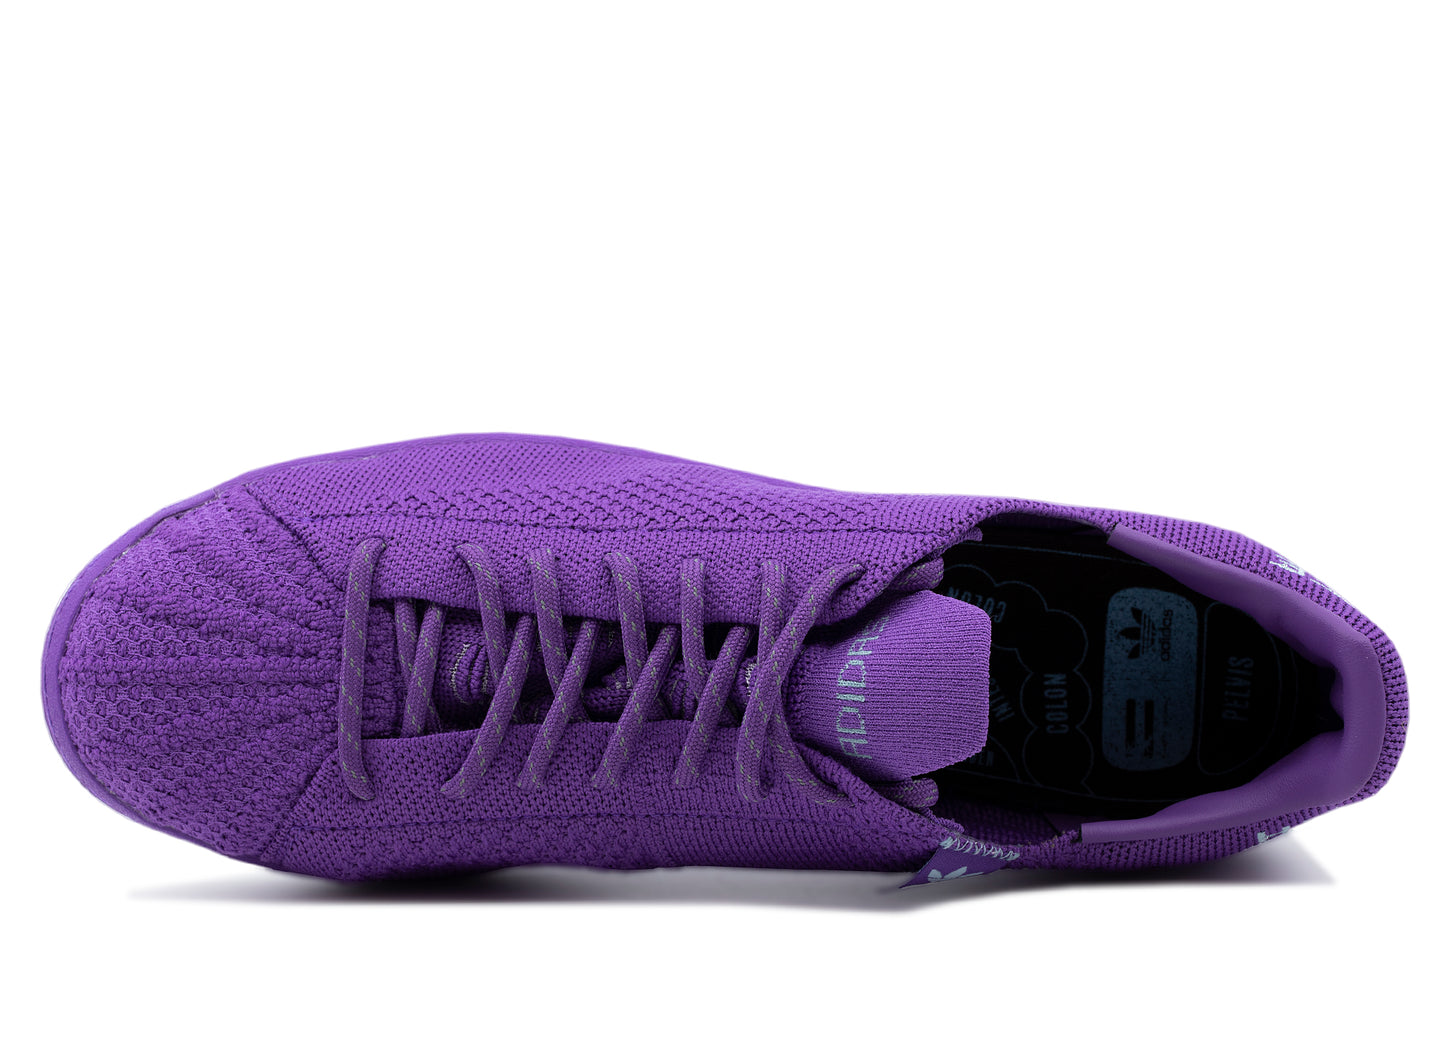 Adidas x Pharrell Williams Superstar PK 'Active Purple'